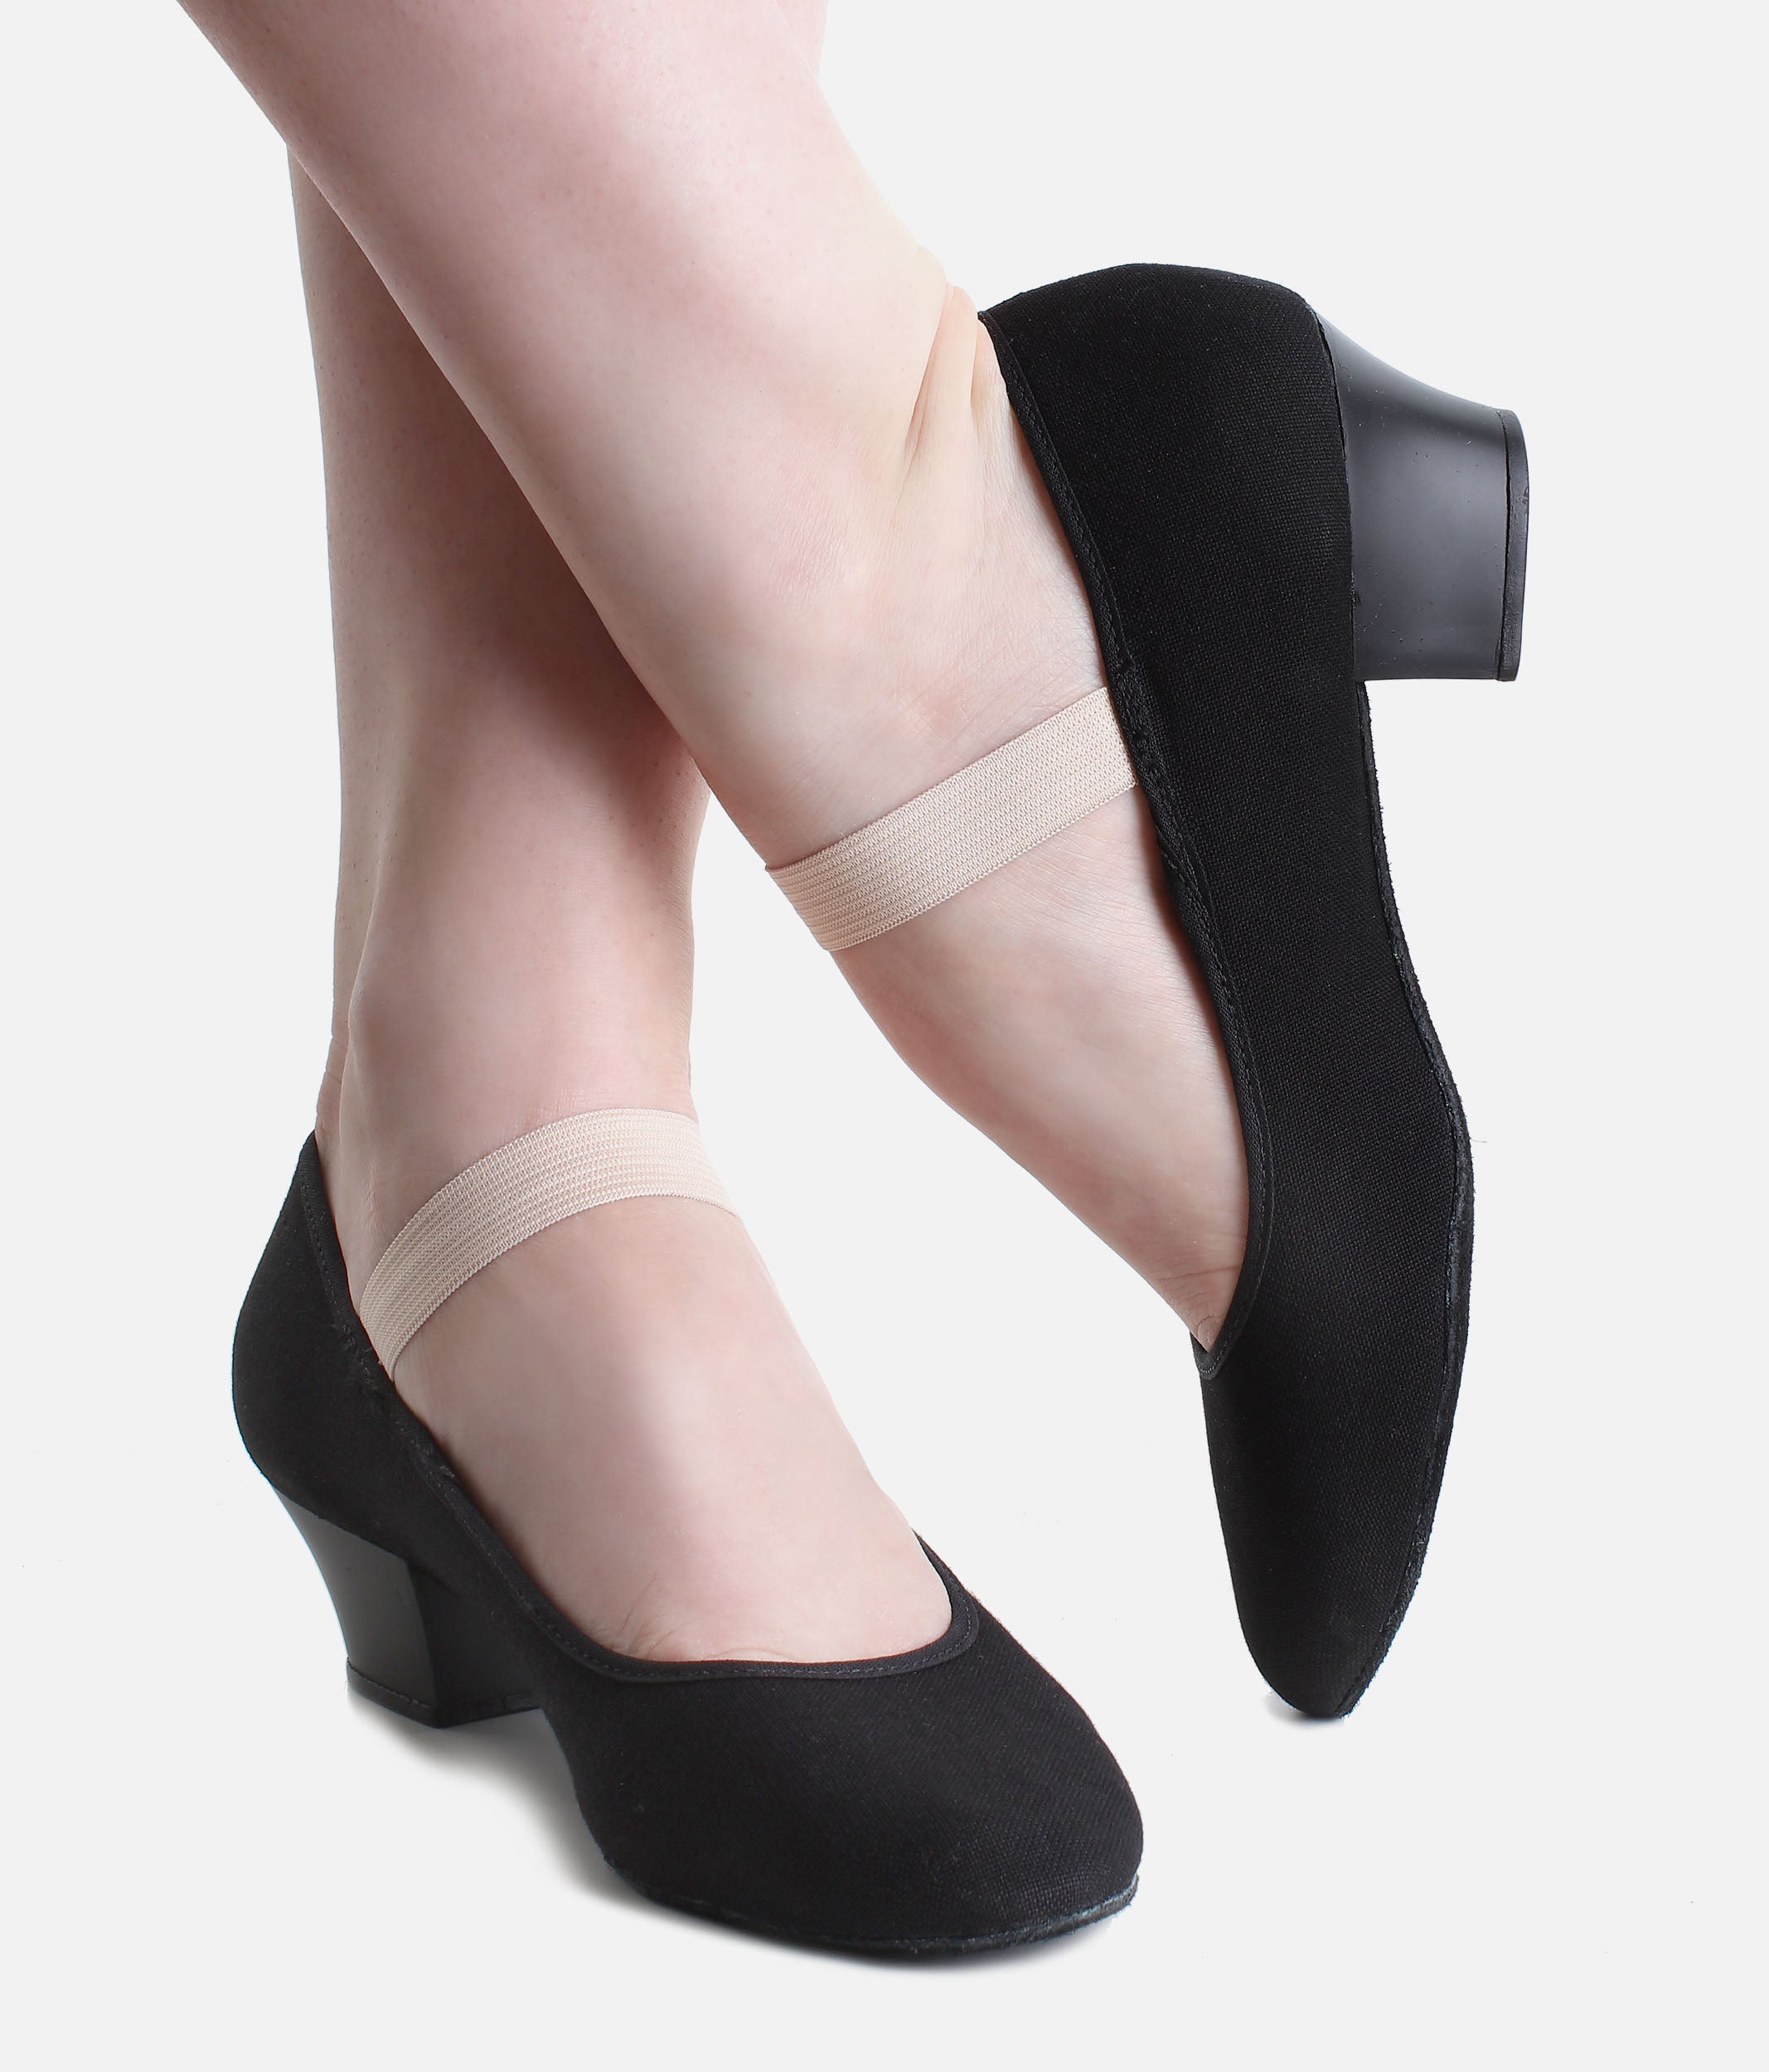 Cuban Heel Canvas Ballet Character Shoes - RO 14